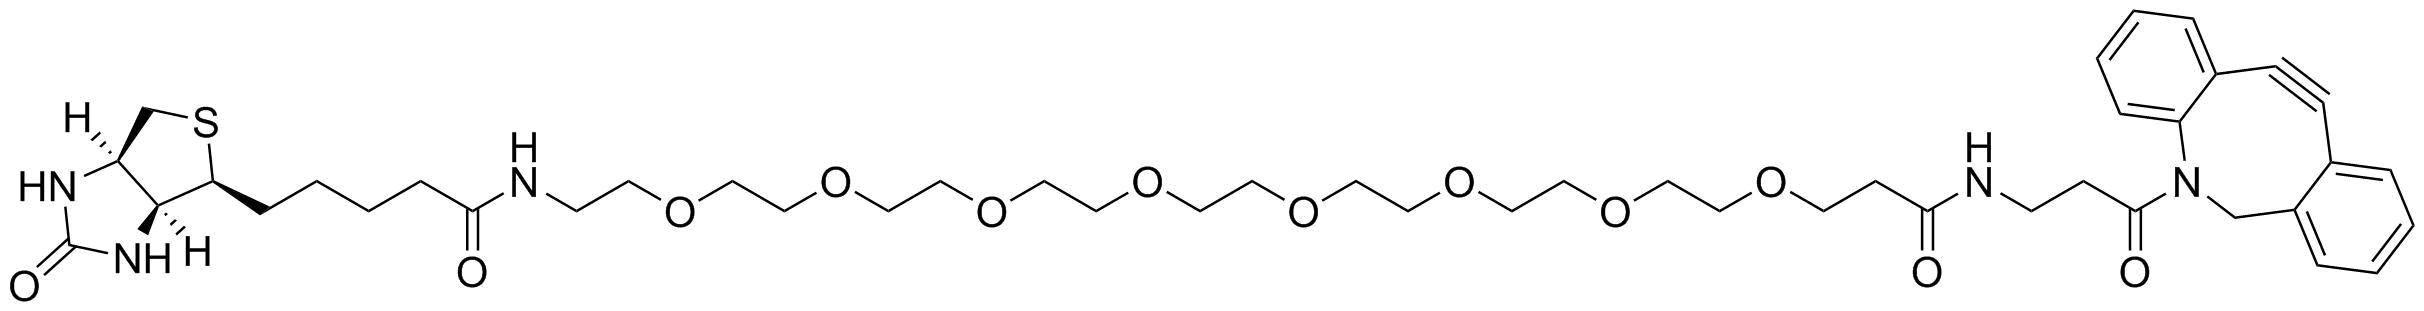 Biotin-PEG8-DBCO